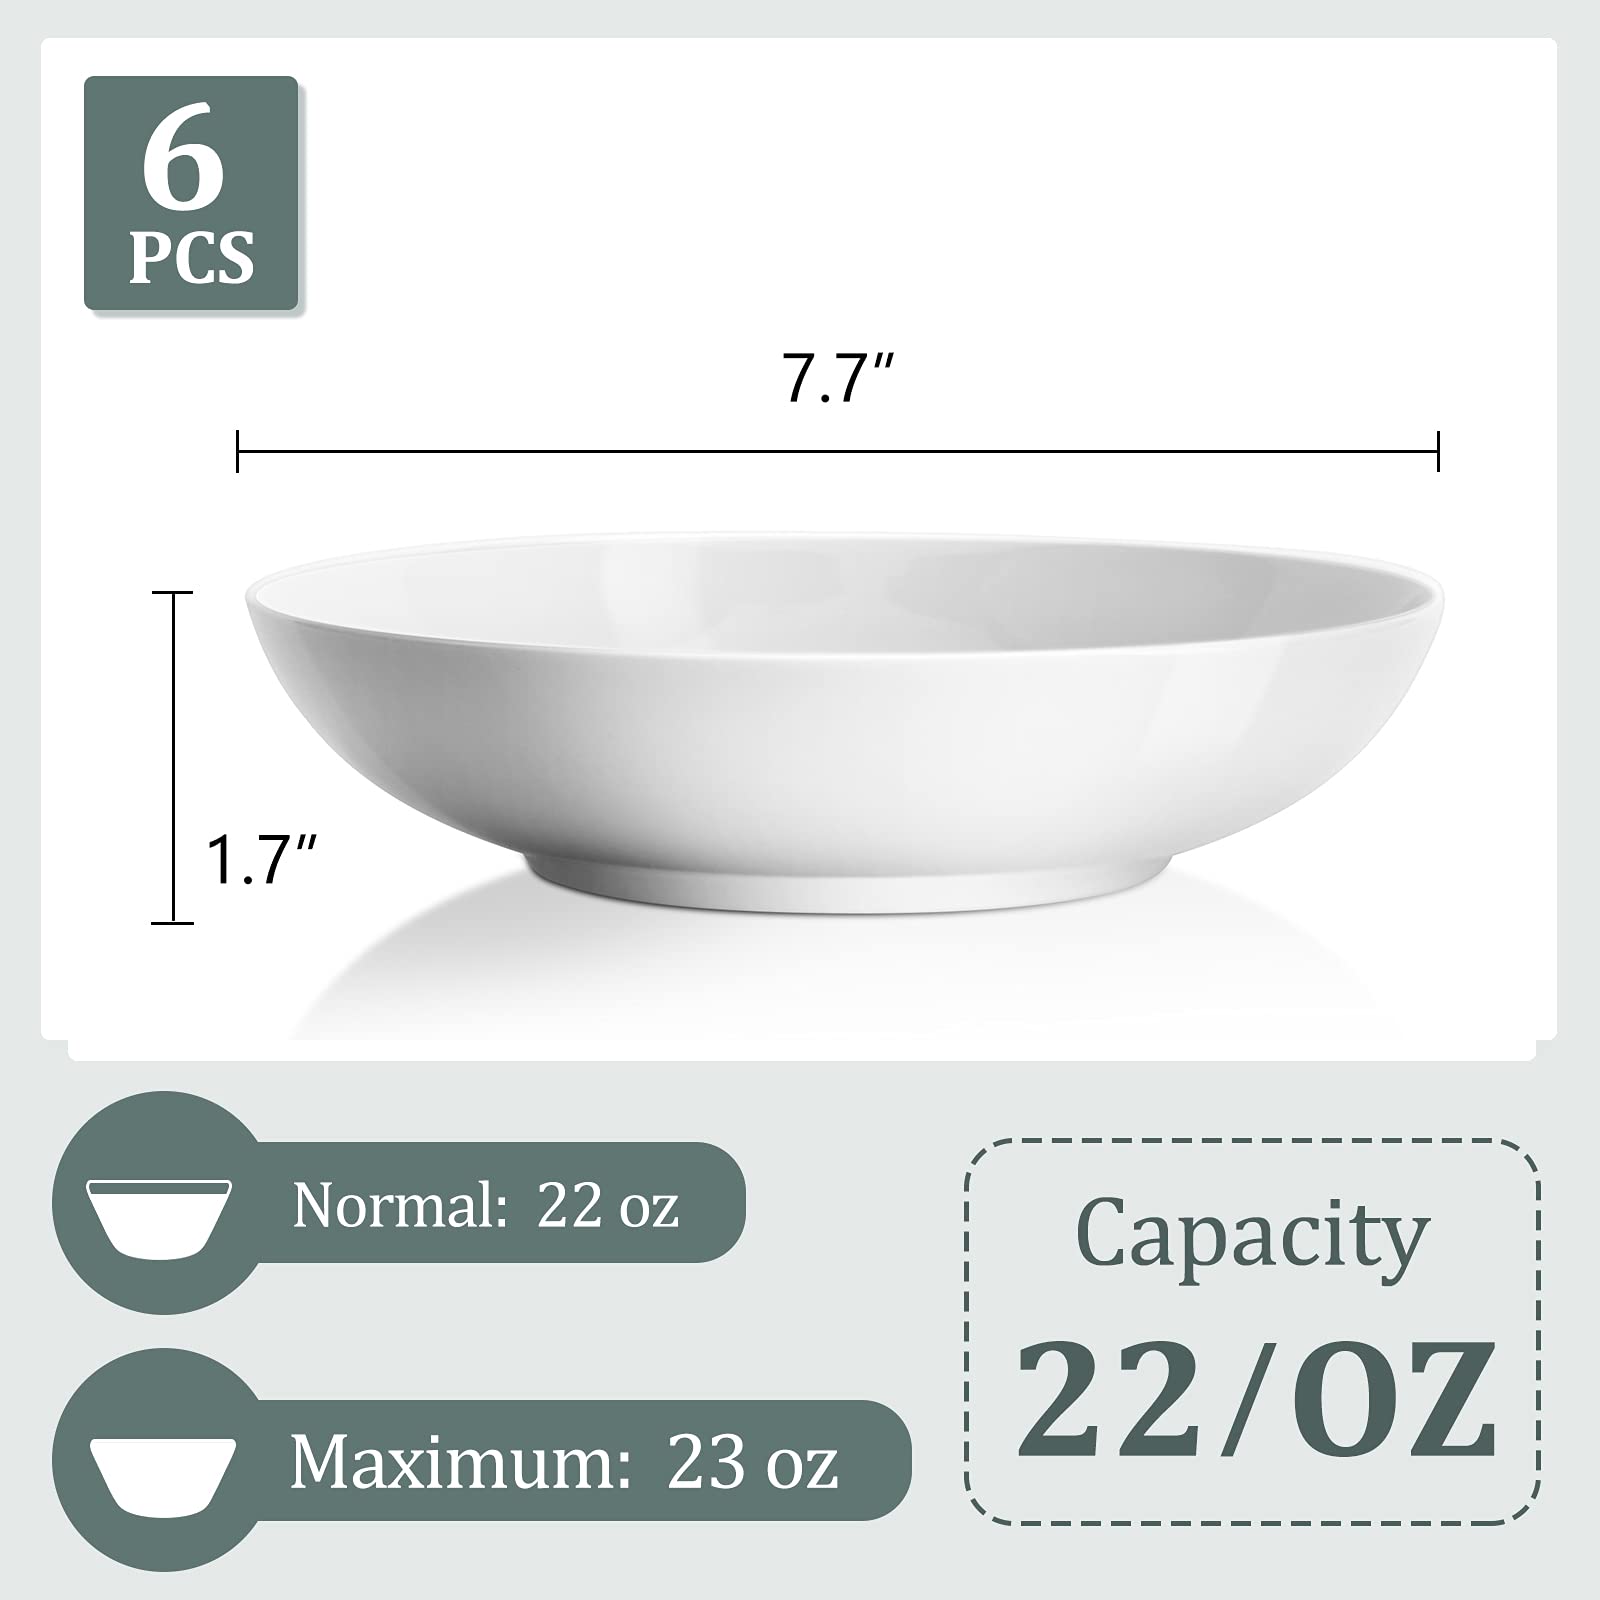 Yedio Porcelain Bowls Set and Pasta Bowls Bundle